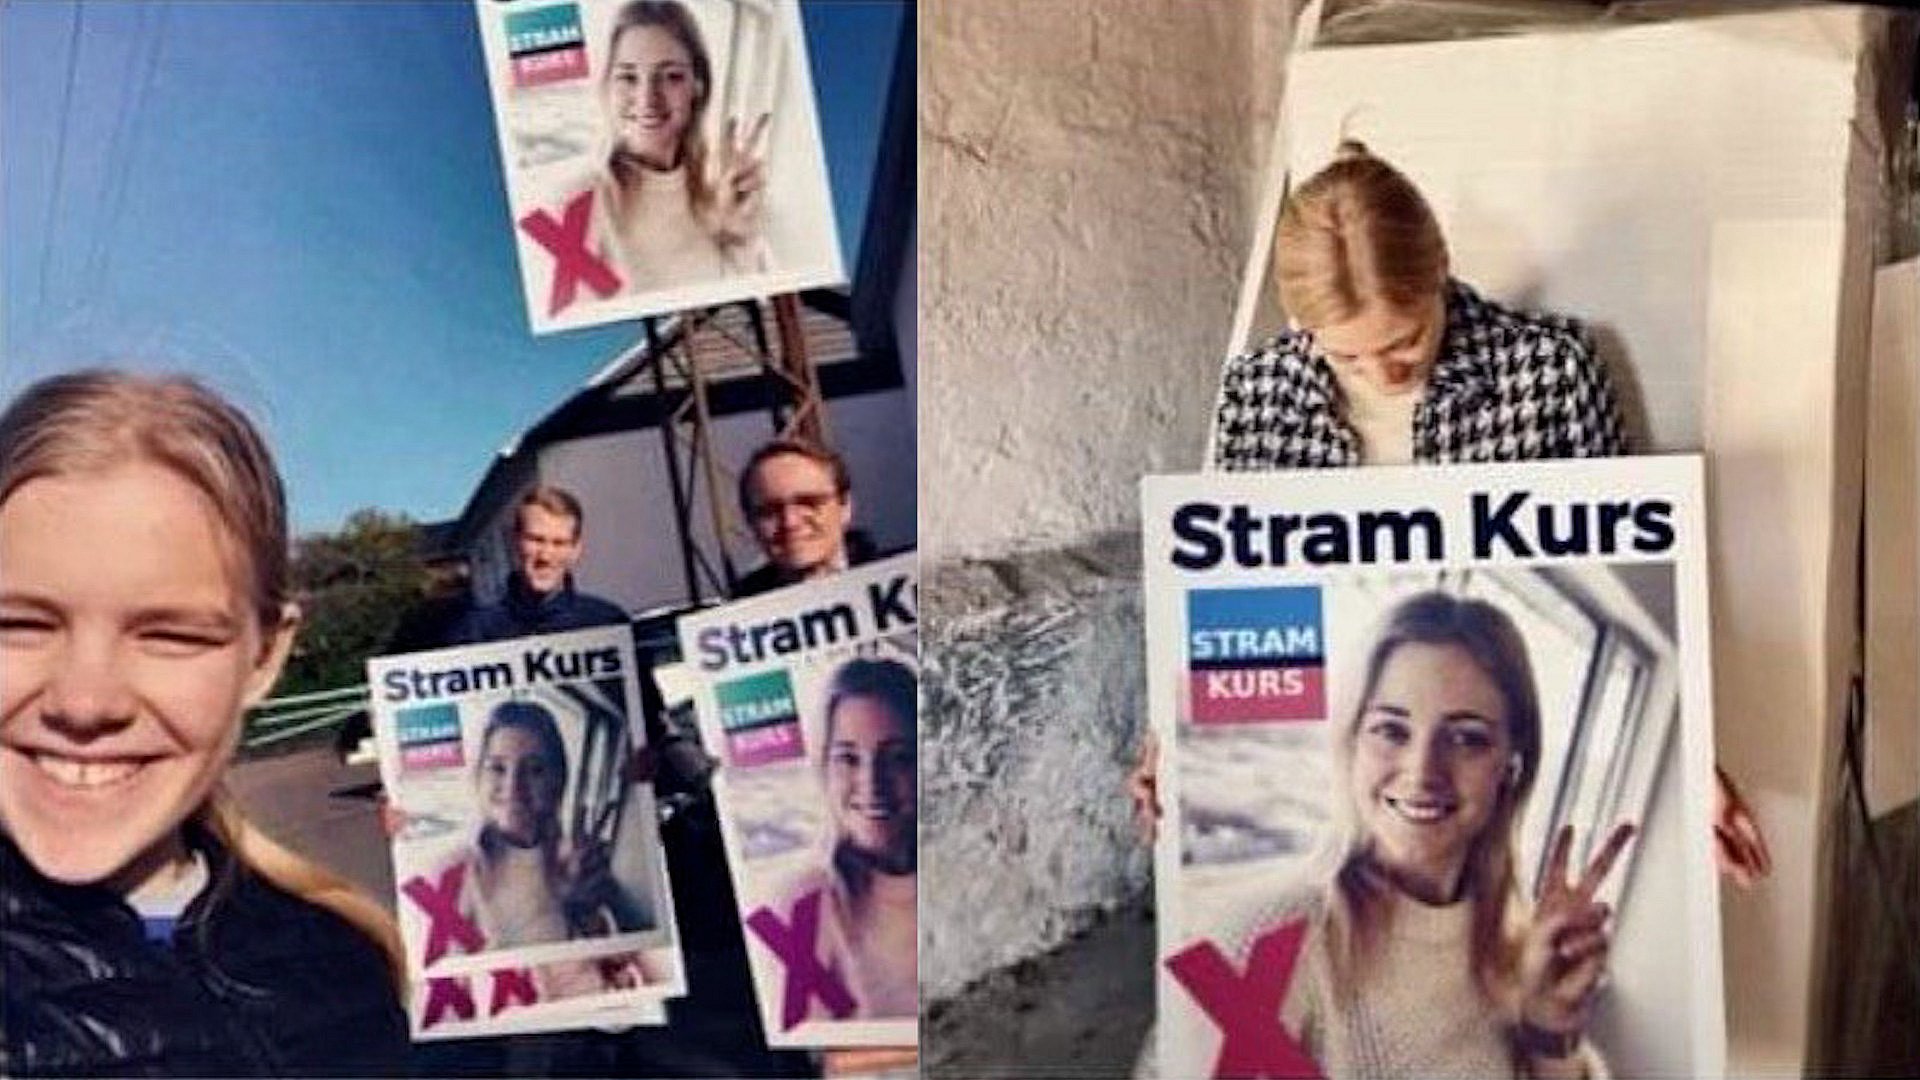 udsat for chikane fra Stram Kurs: - Hun har stjålet fra siger Stram Kurs-medlem | TV2 Nord